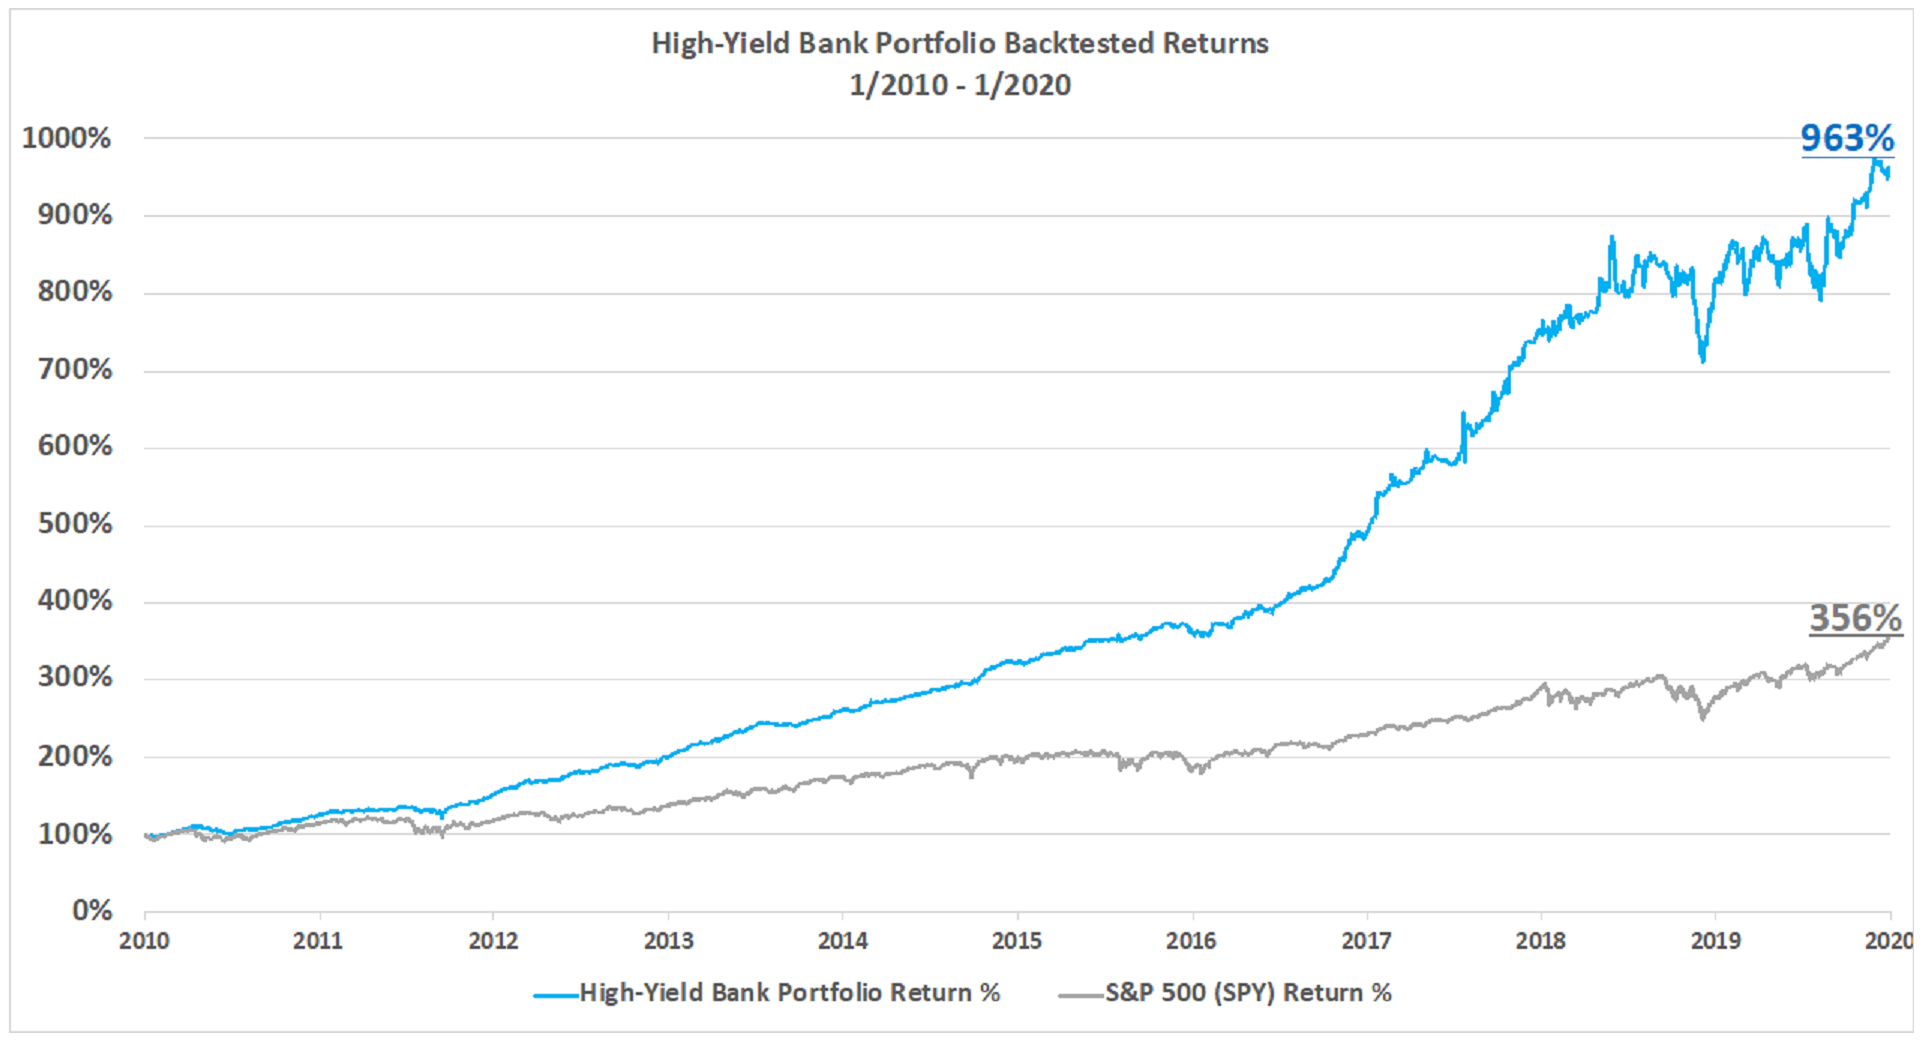 High-Yield Bank Portfolio Backtested Returns